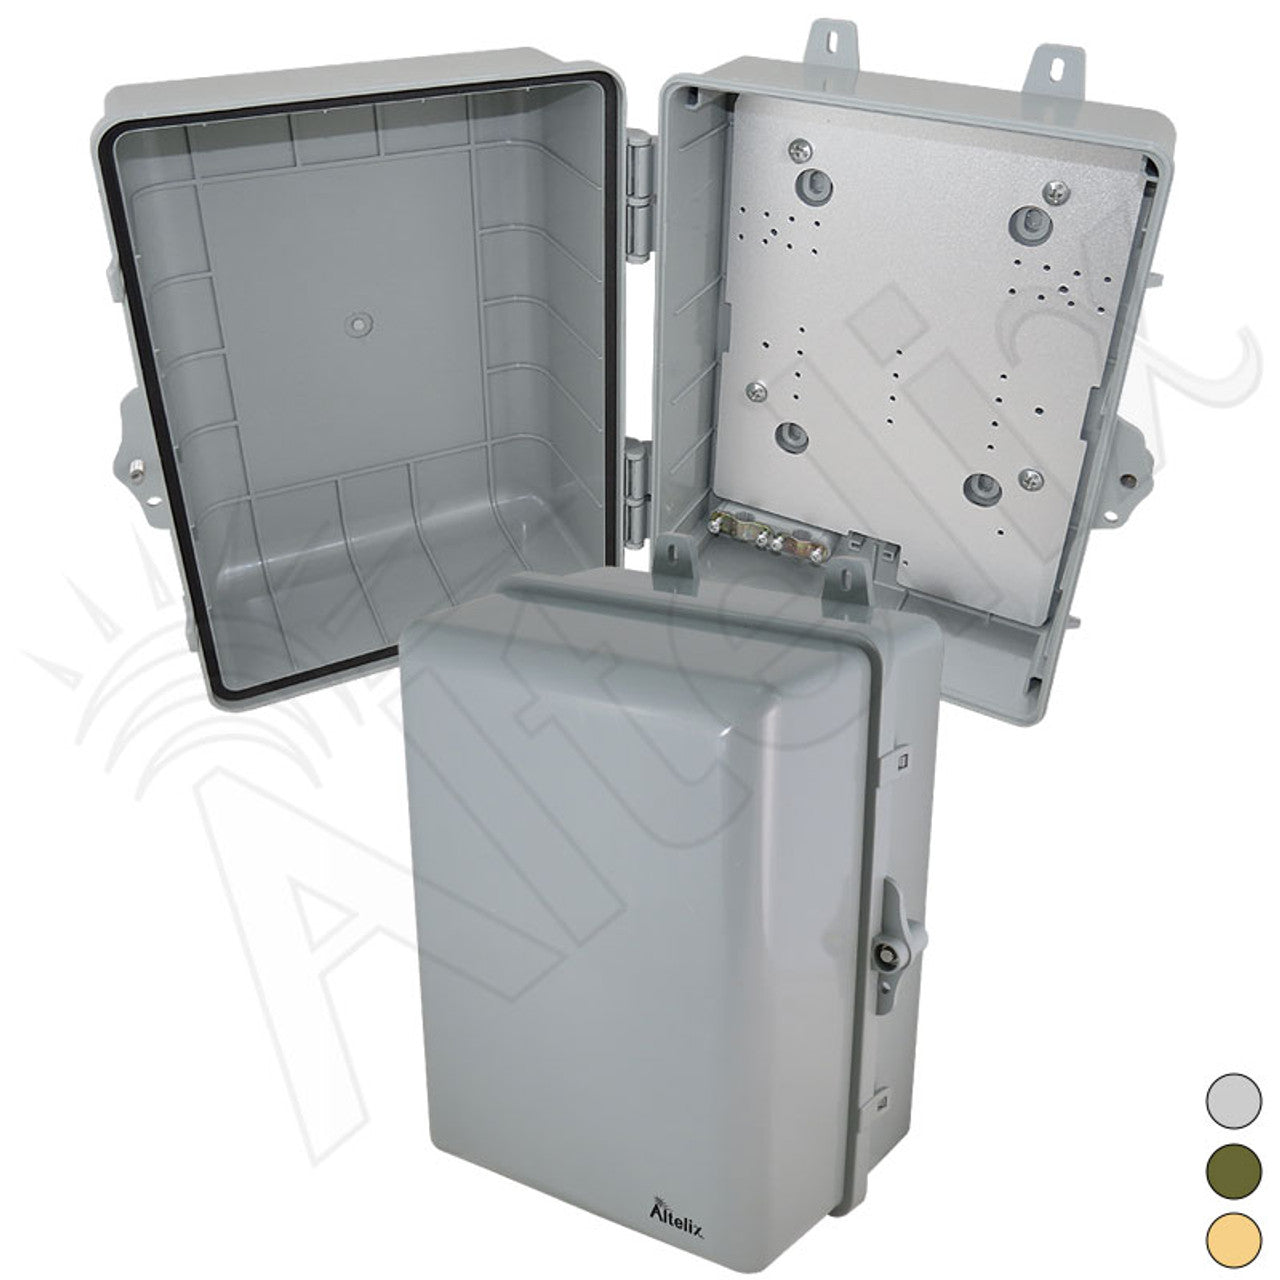 Altelix 12x9x7 IP66 NEMA 4X PC+ABS Weatherproof Utility Box with Hinged Door and Aluminum Mounting Plate-1